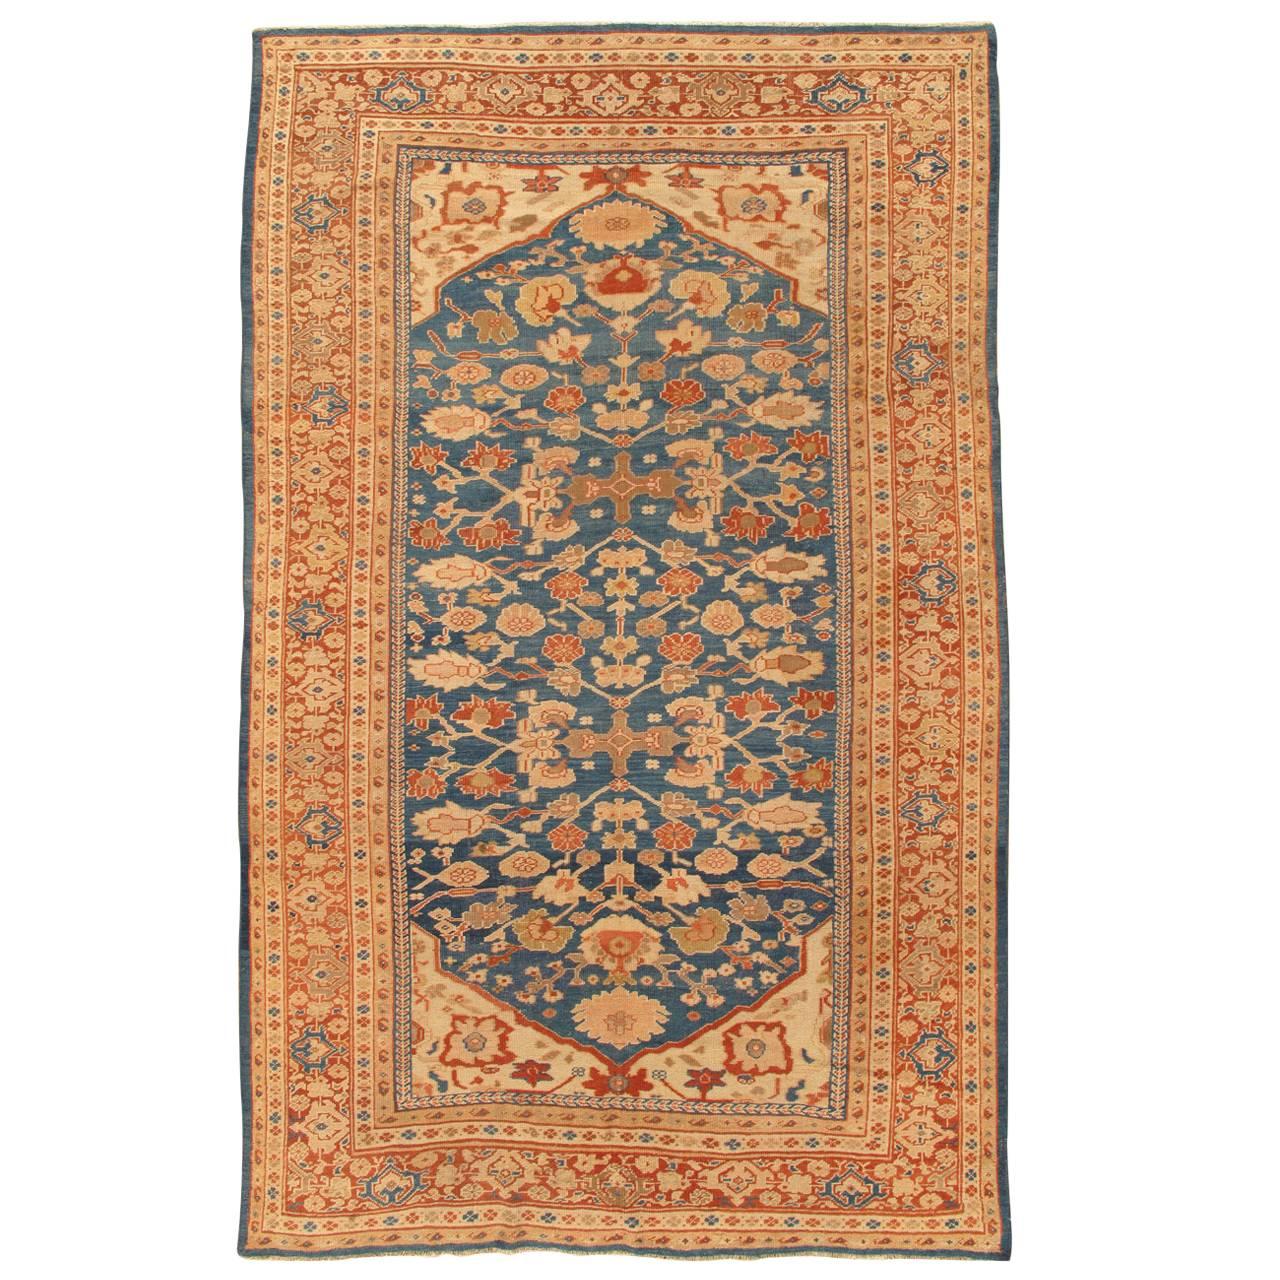 Antique Persian Sultanabad Carpet, Handmade Oriental Rug, Light Blue, Terracotta For Sale